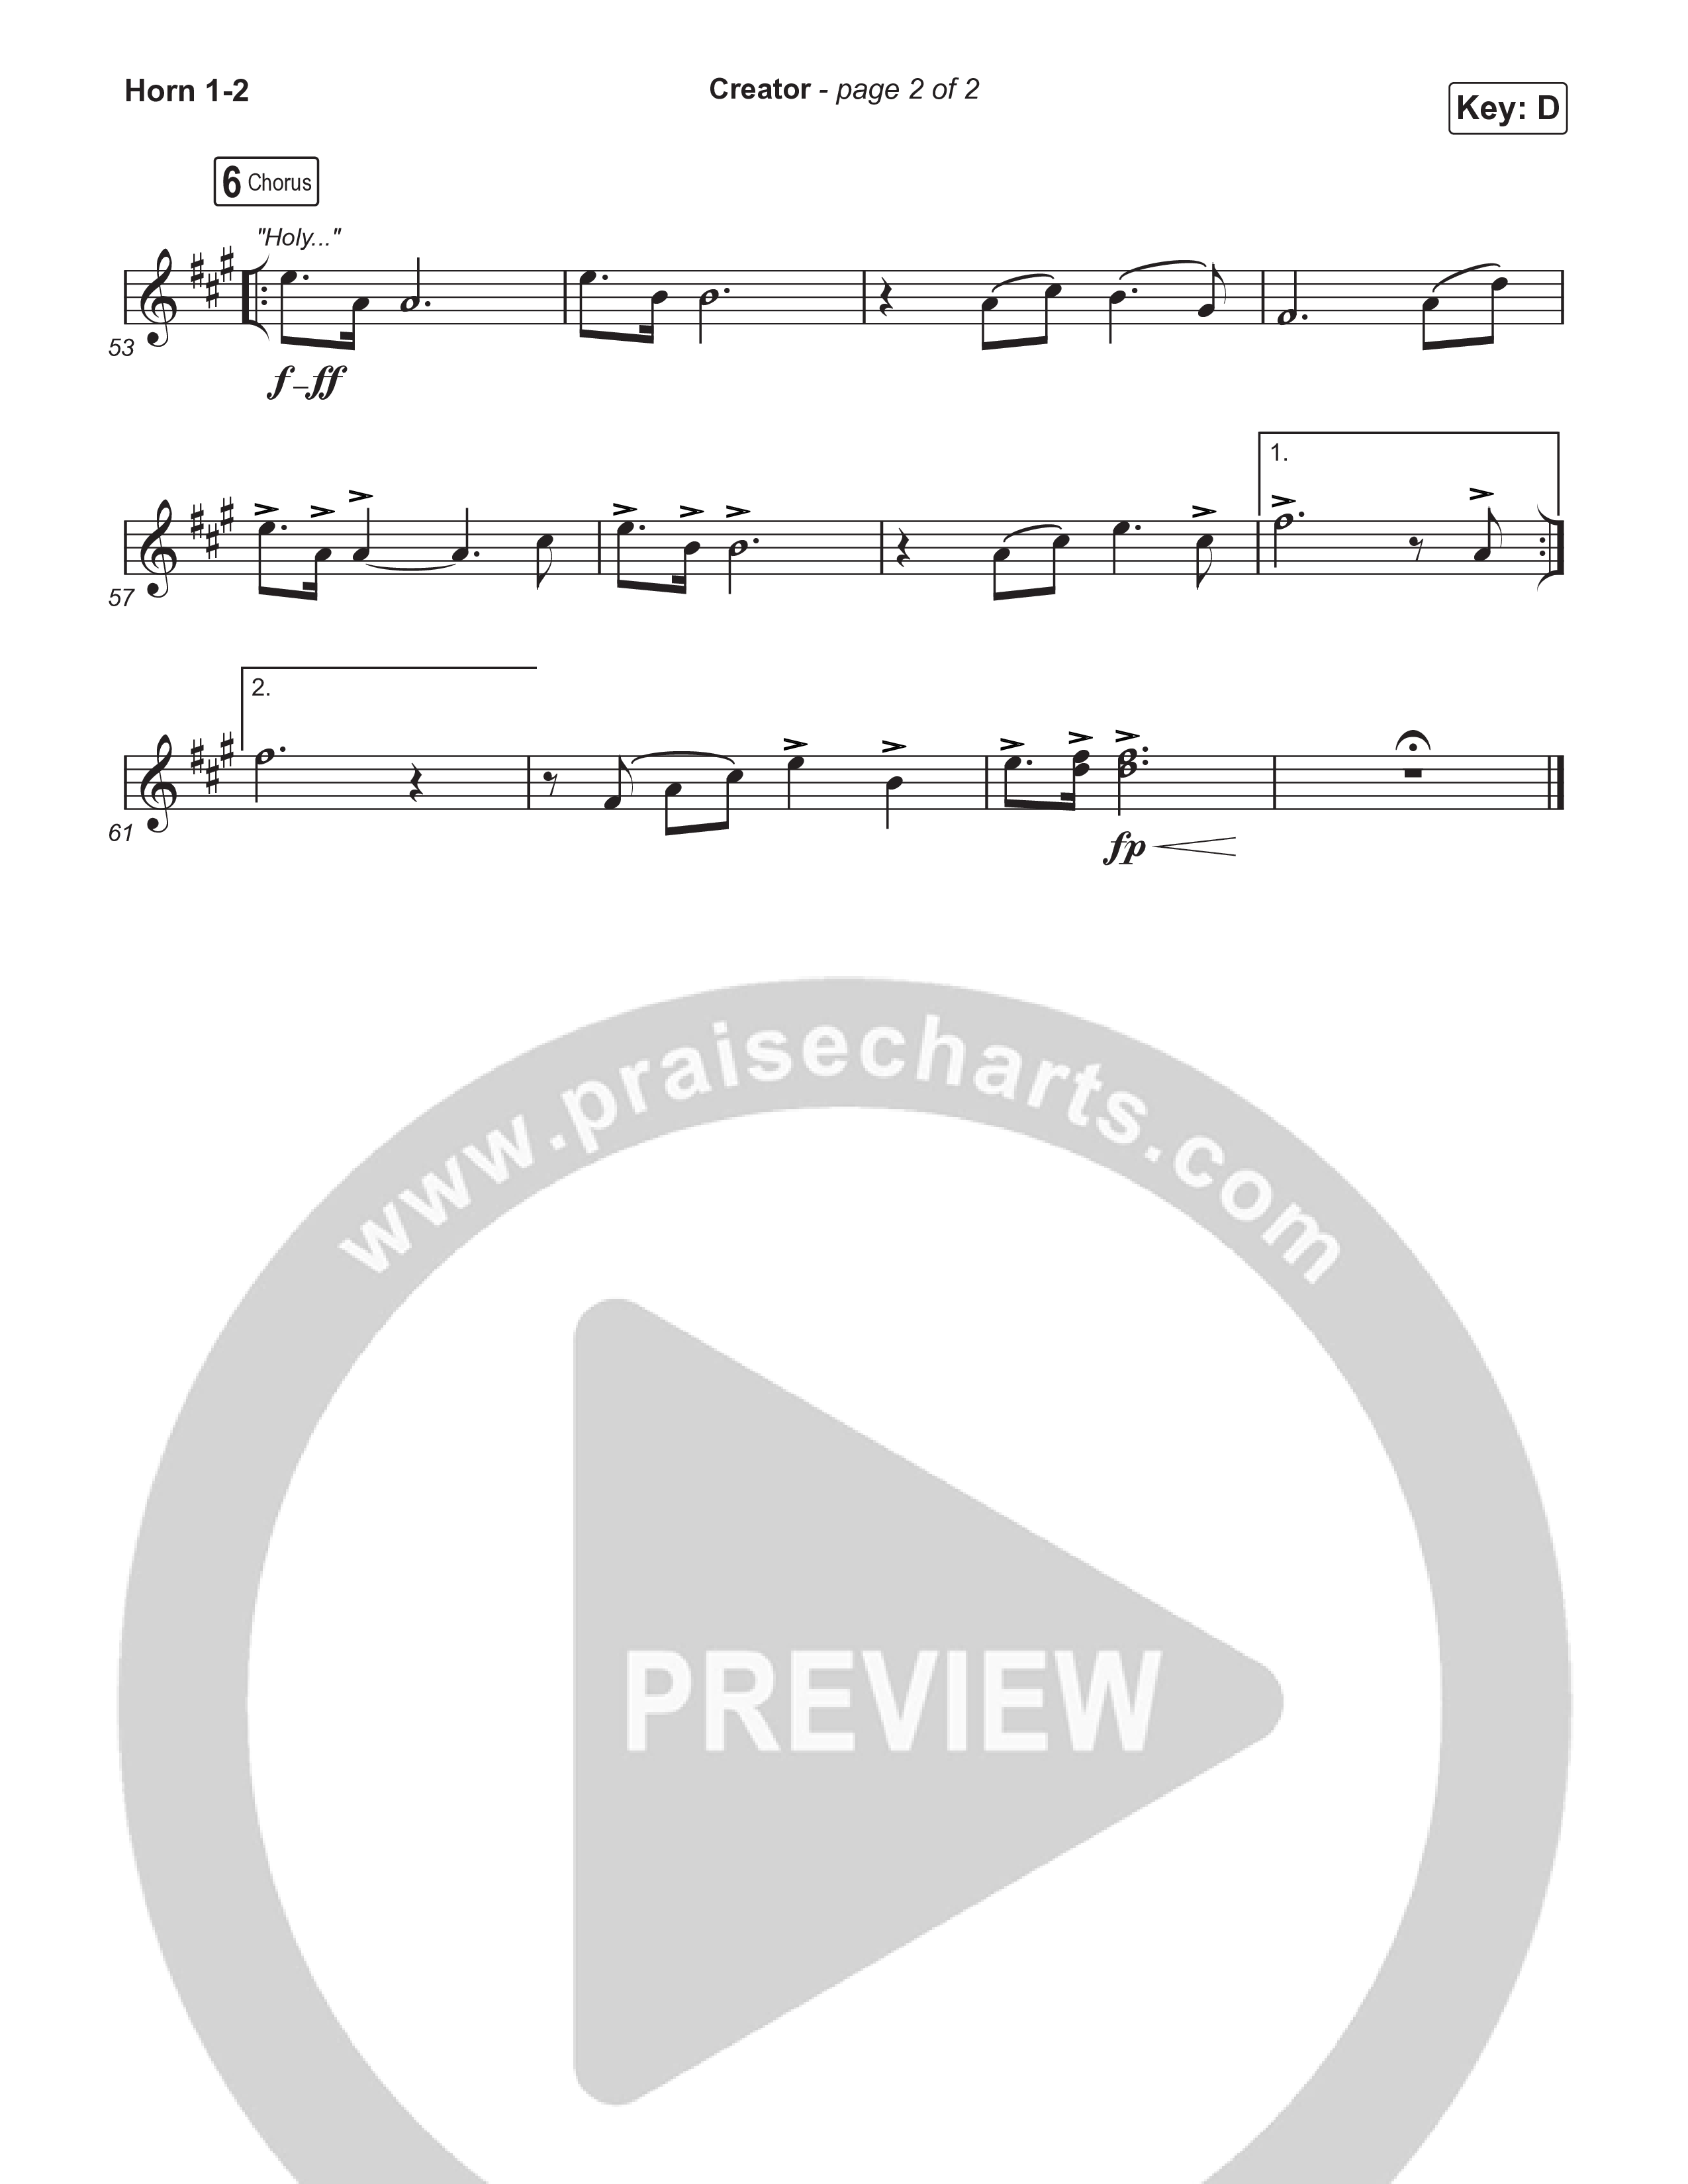 Creator (Choral Anthem SATB) Brass Pack (Phil Wickham / Arr. Mason Brown)